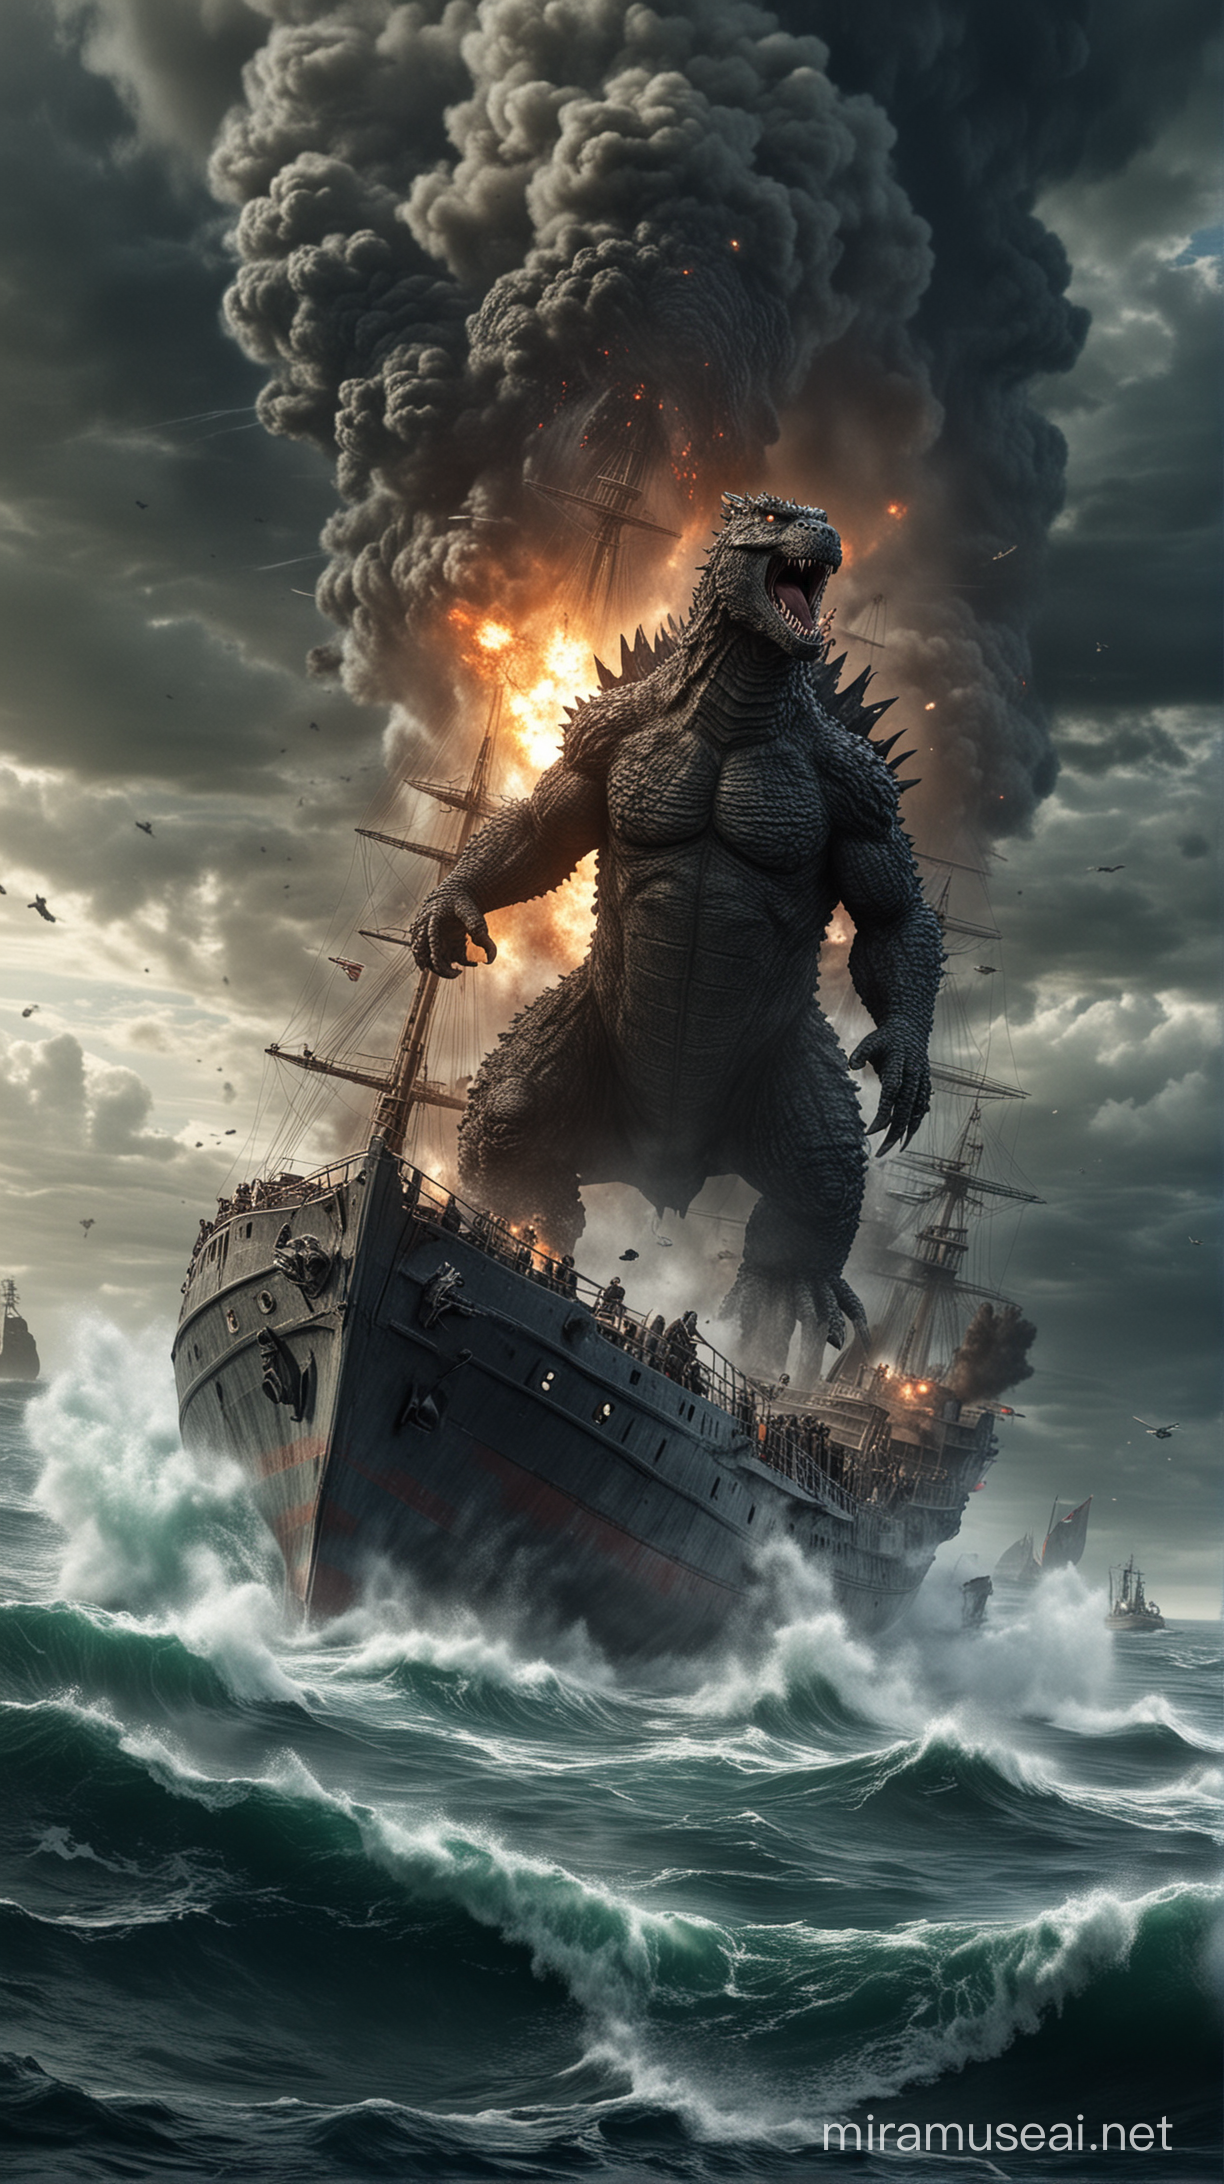 Rampaging Godzilla Destroys Ship at Sea